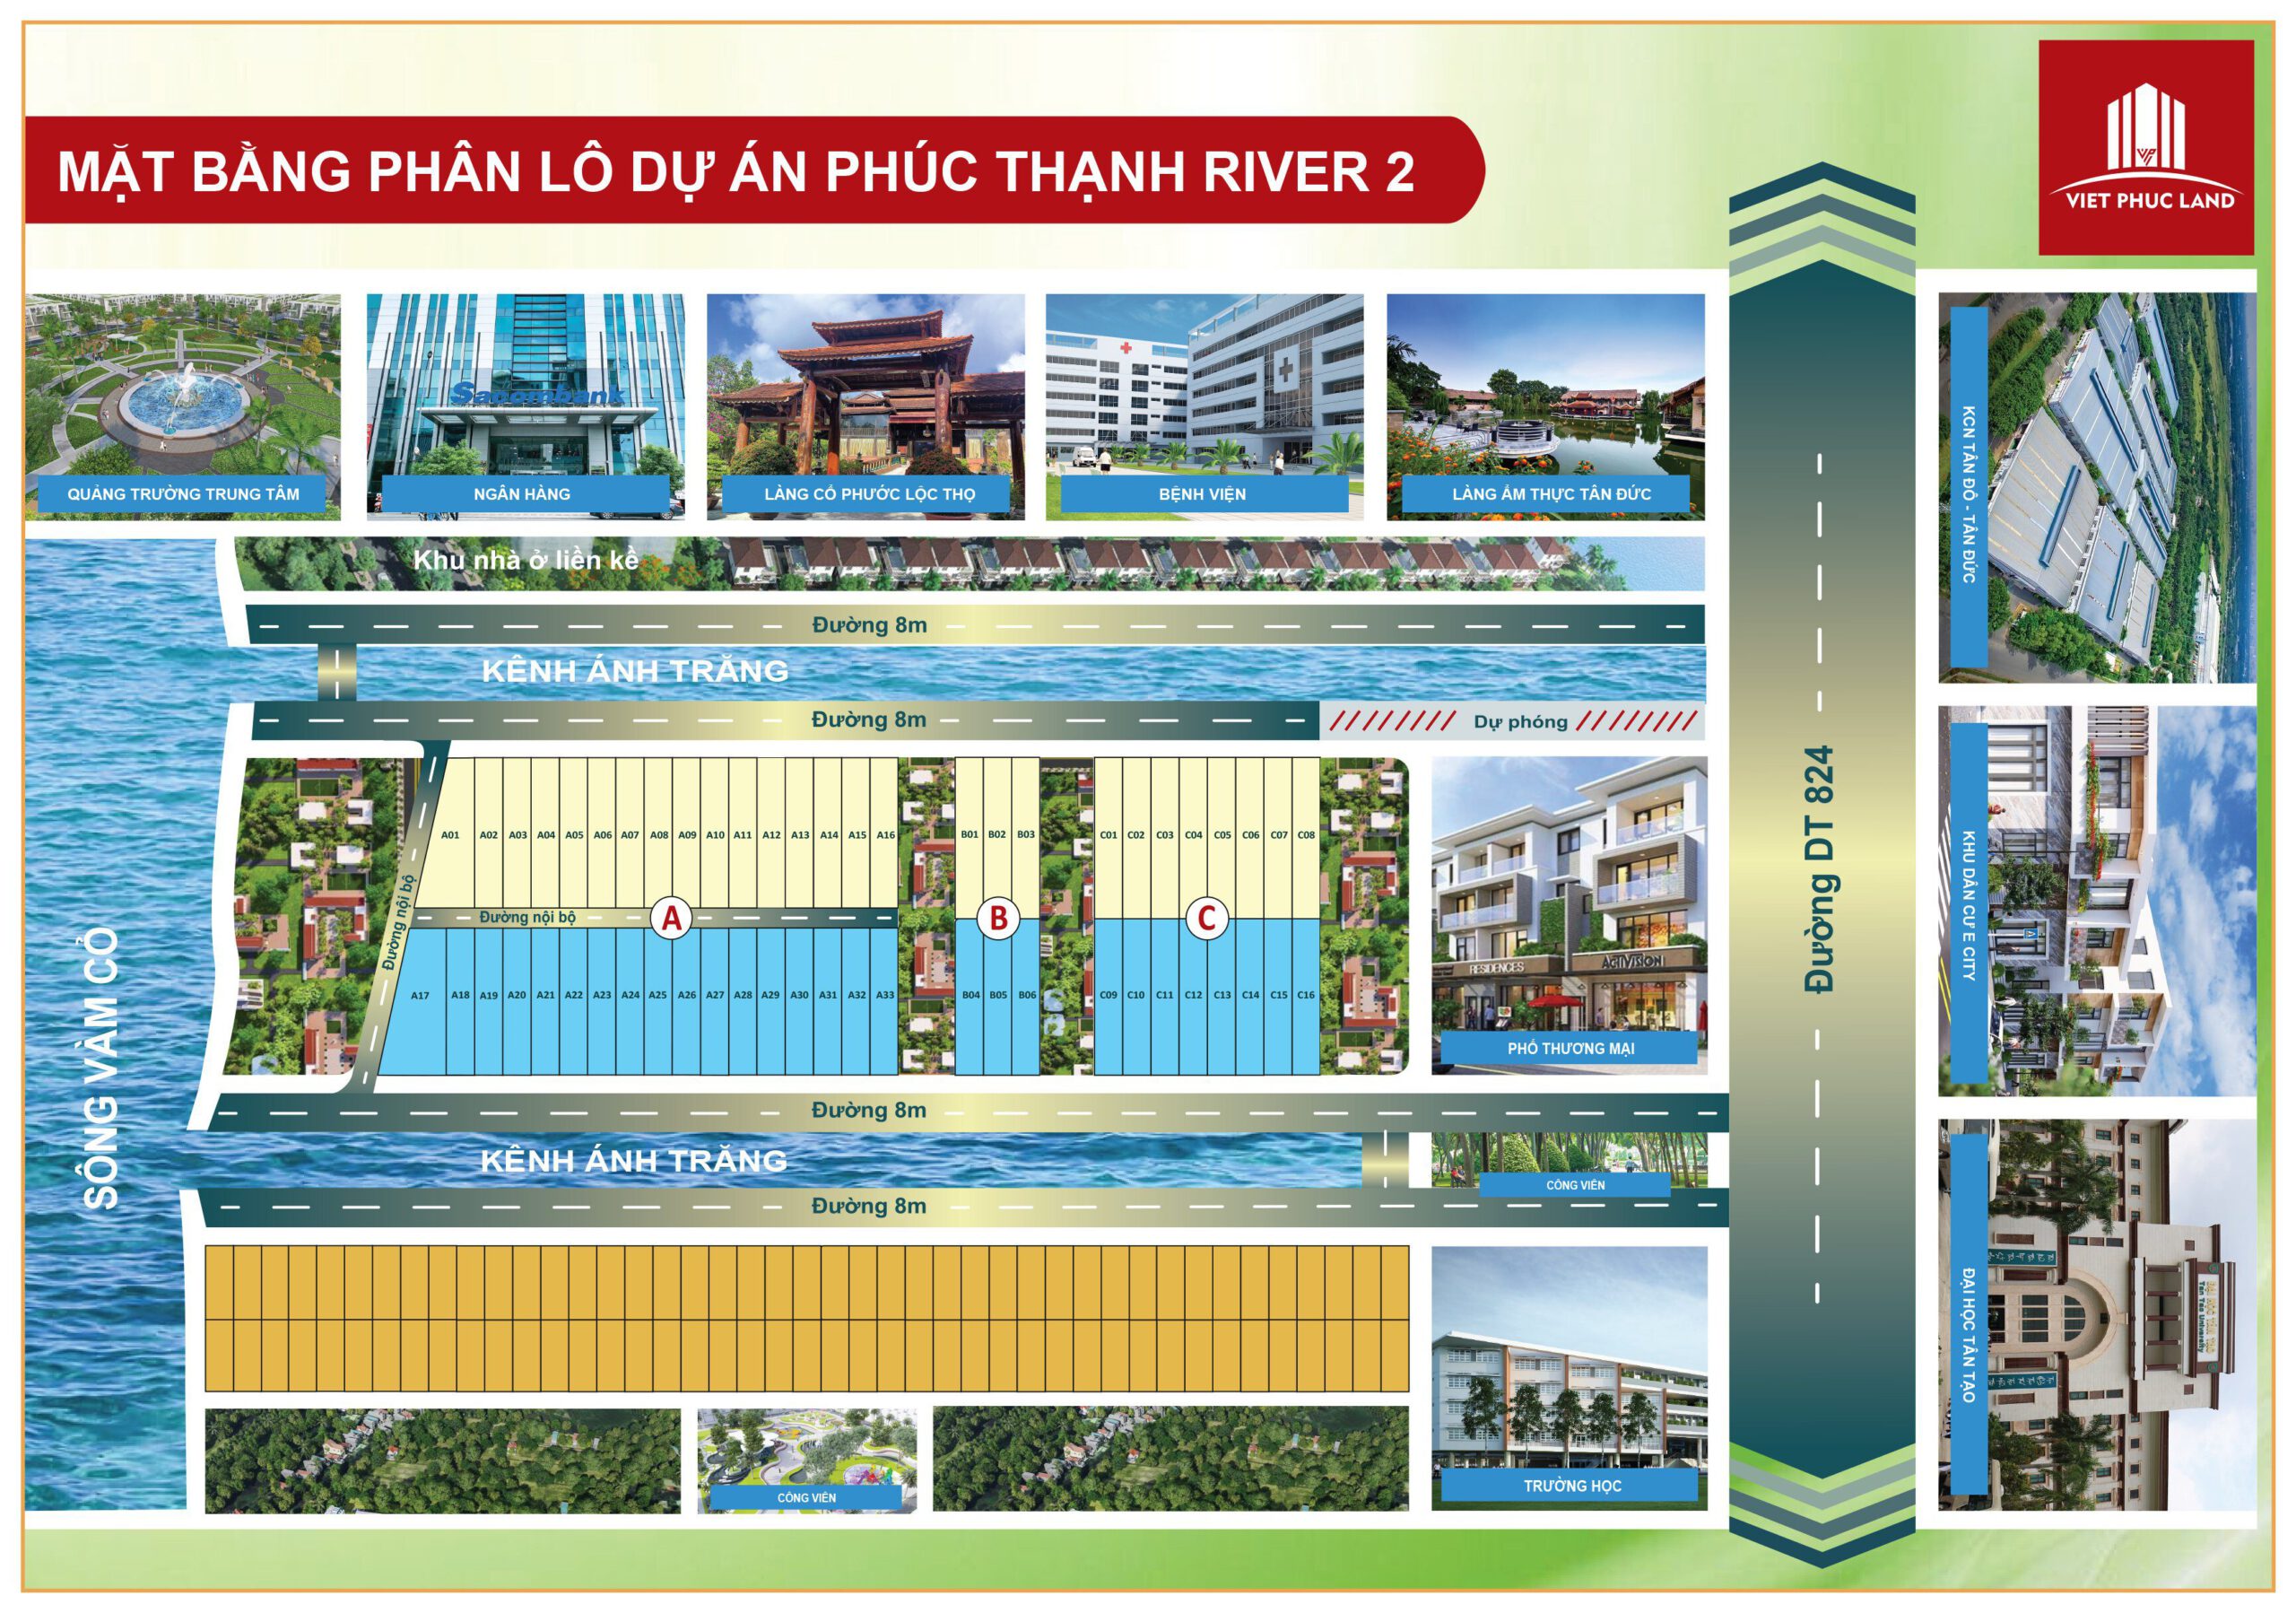 Mat Bang Phuc Thanh River 2